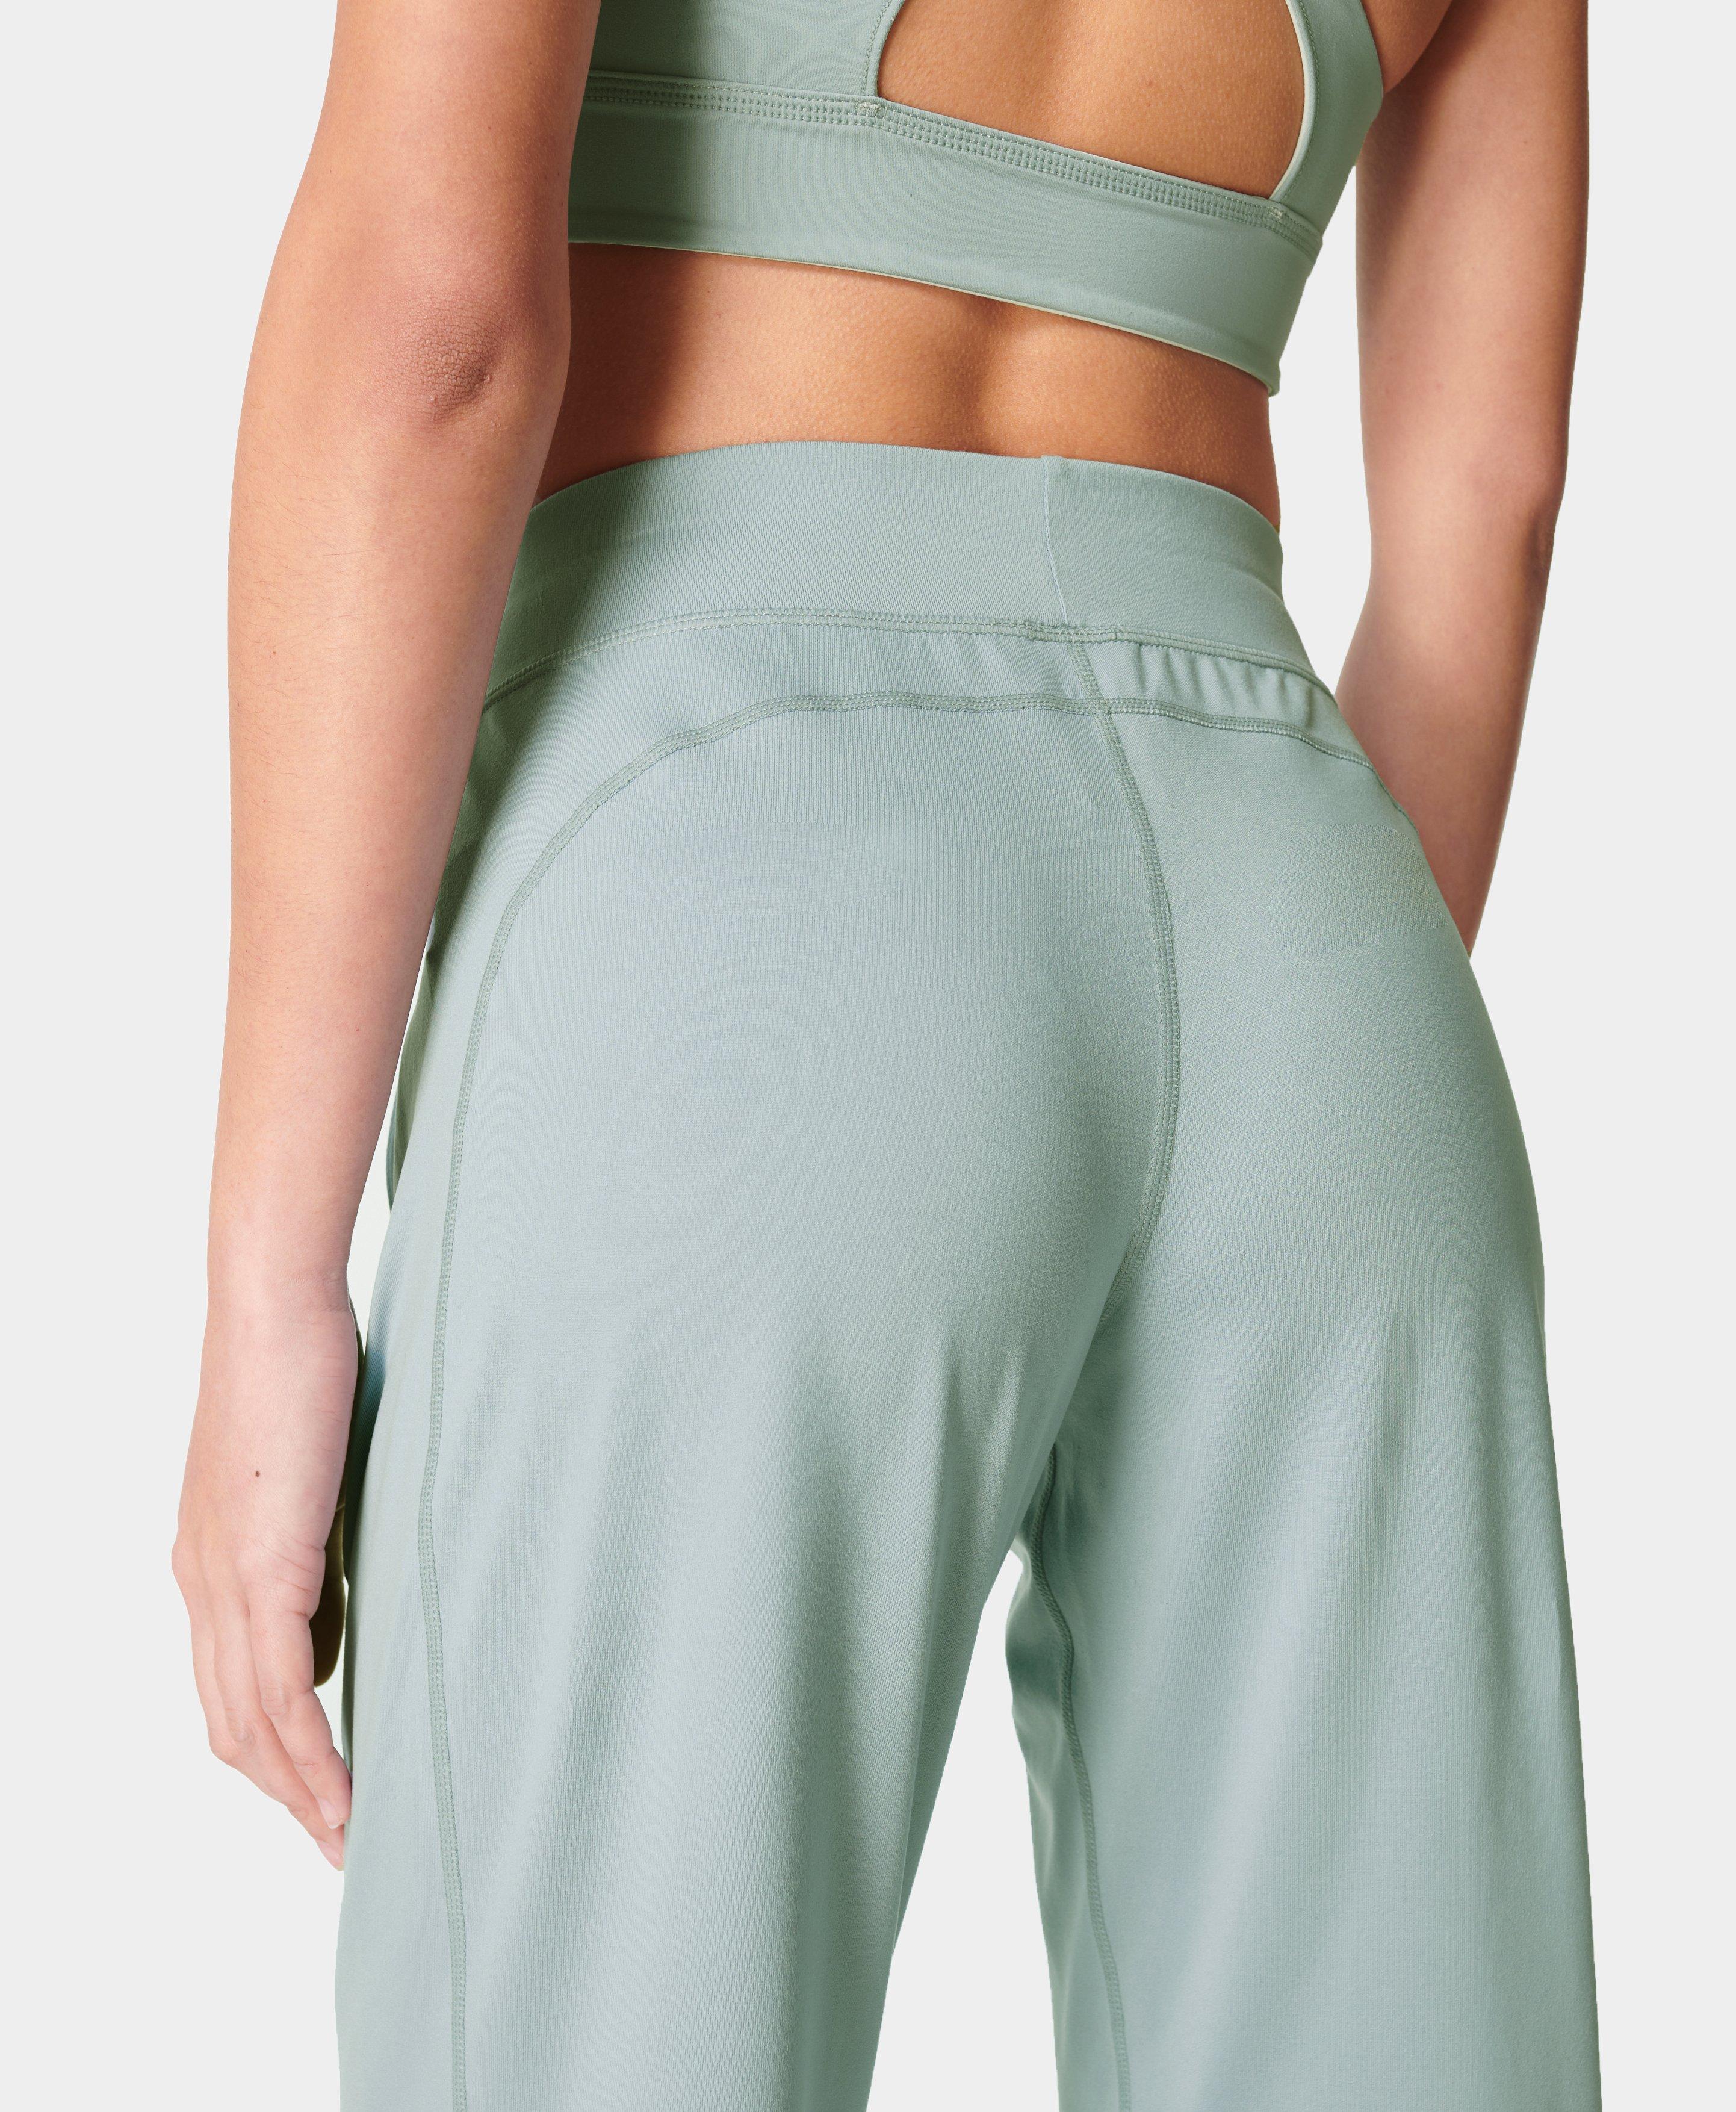 Gary Yoga Pants - Vapour Blue  Women's Trousers & Yoga Pants